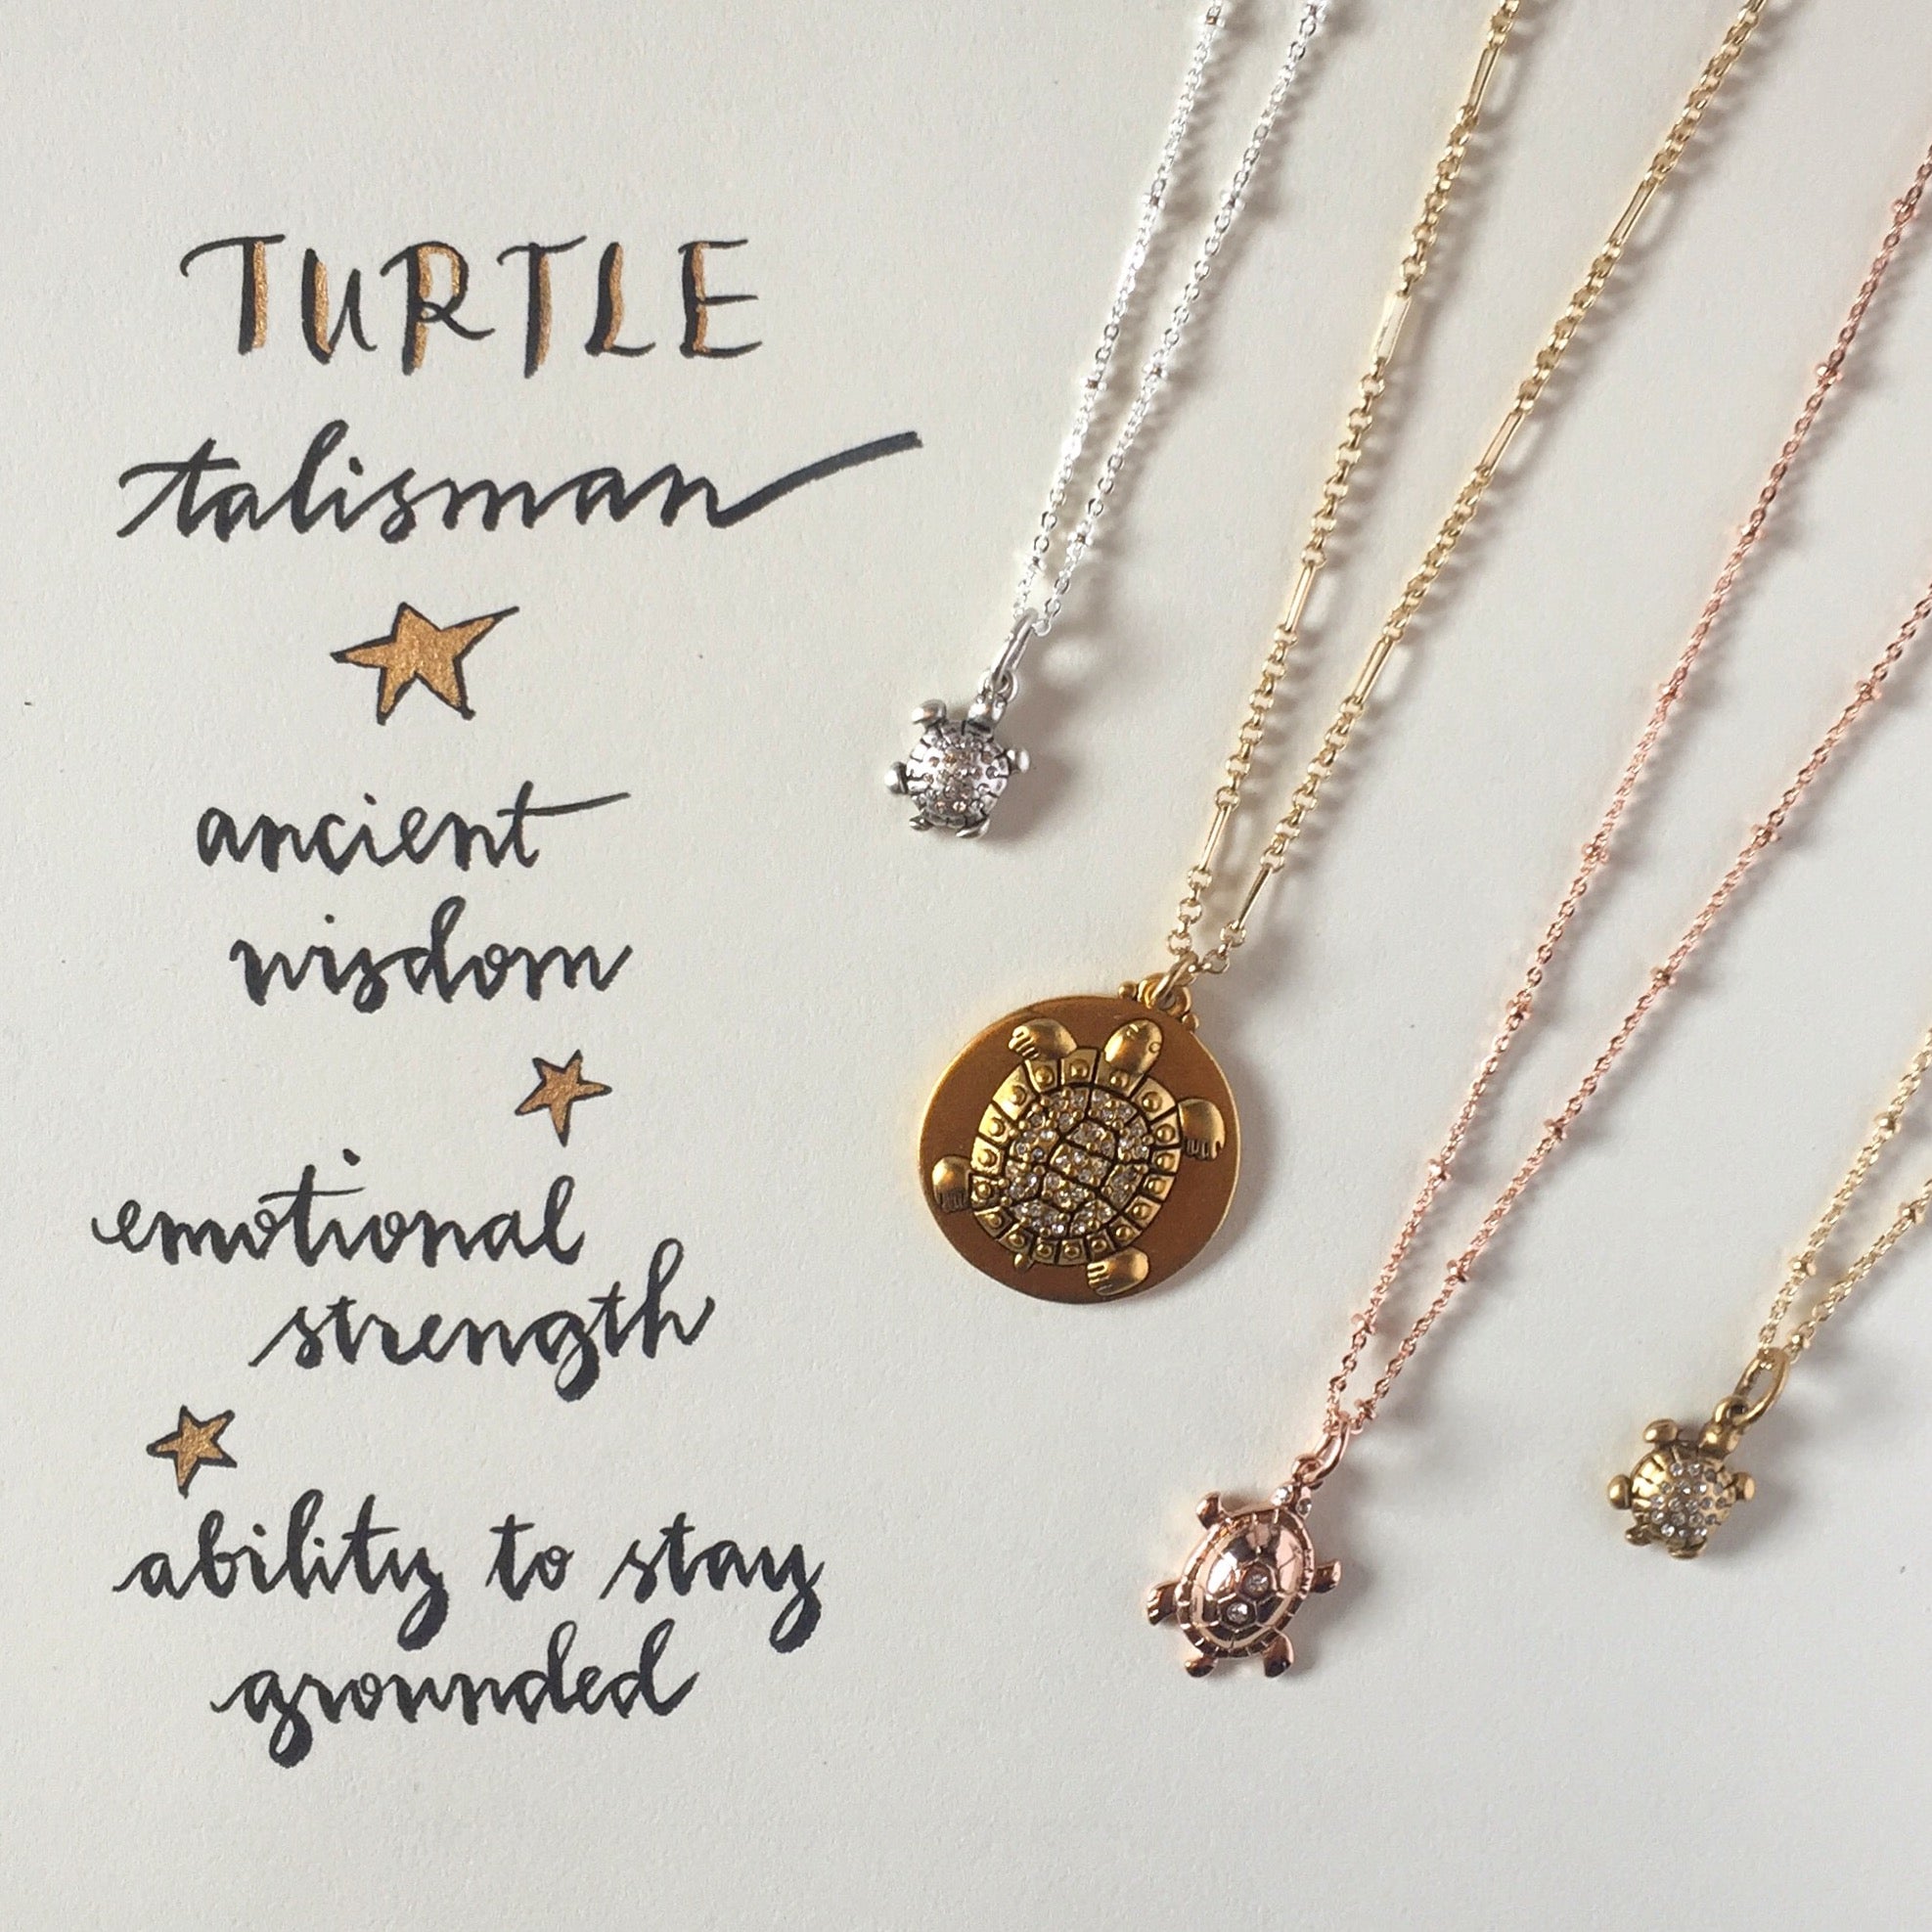 Sequin Jewelry Turtle Talismans - Symbolism